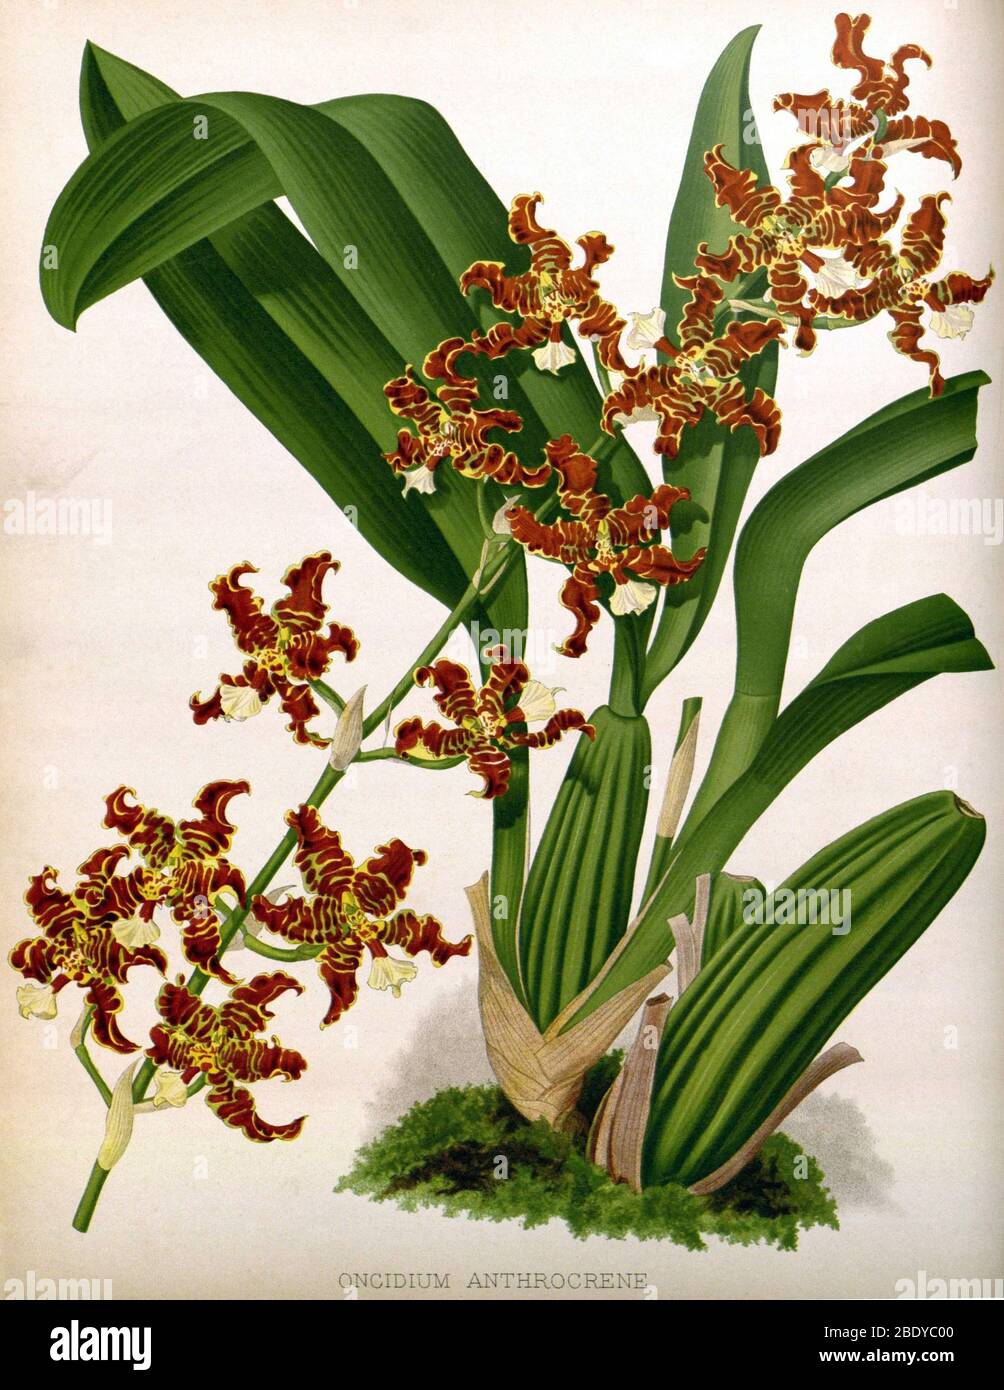 Orchid, Oncidium anthrocrene,1891 Stock Photo